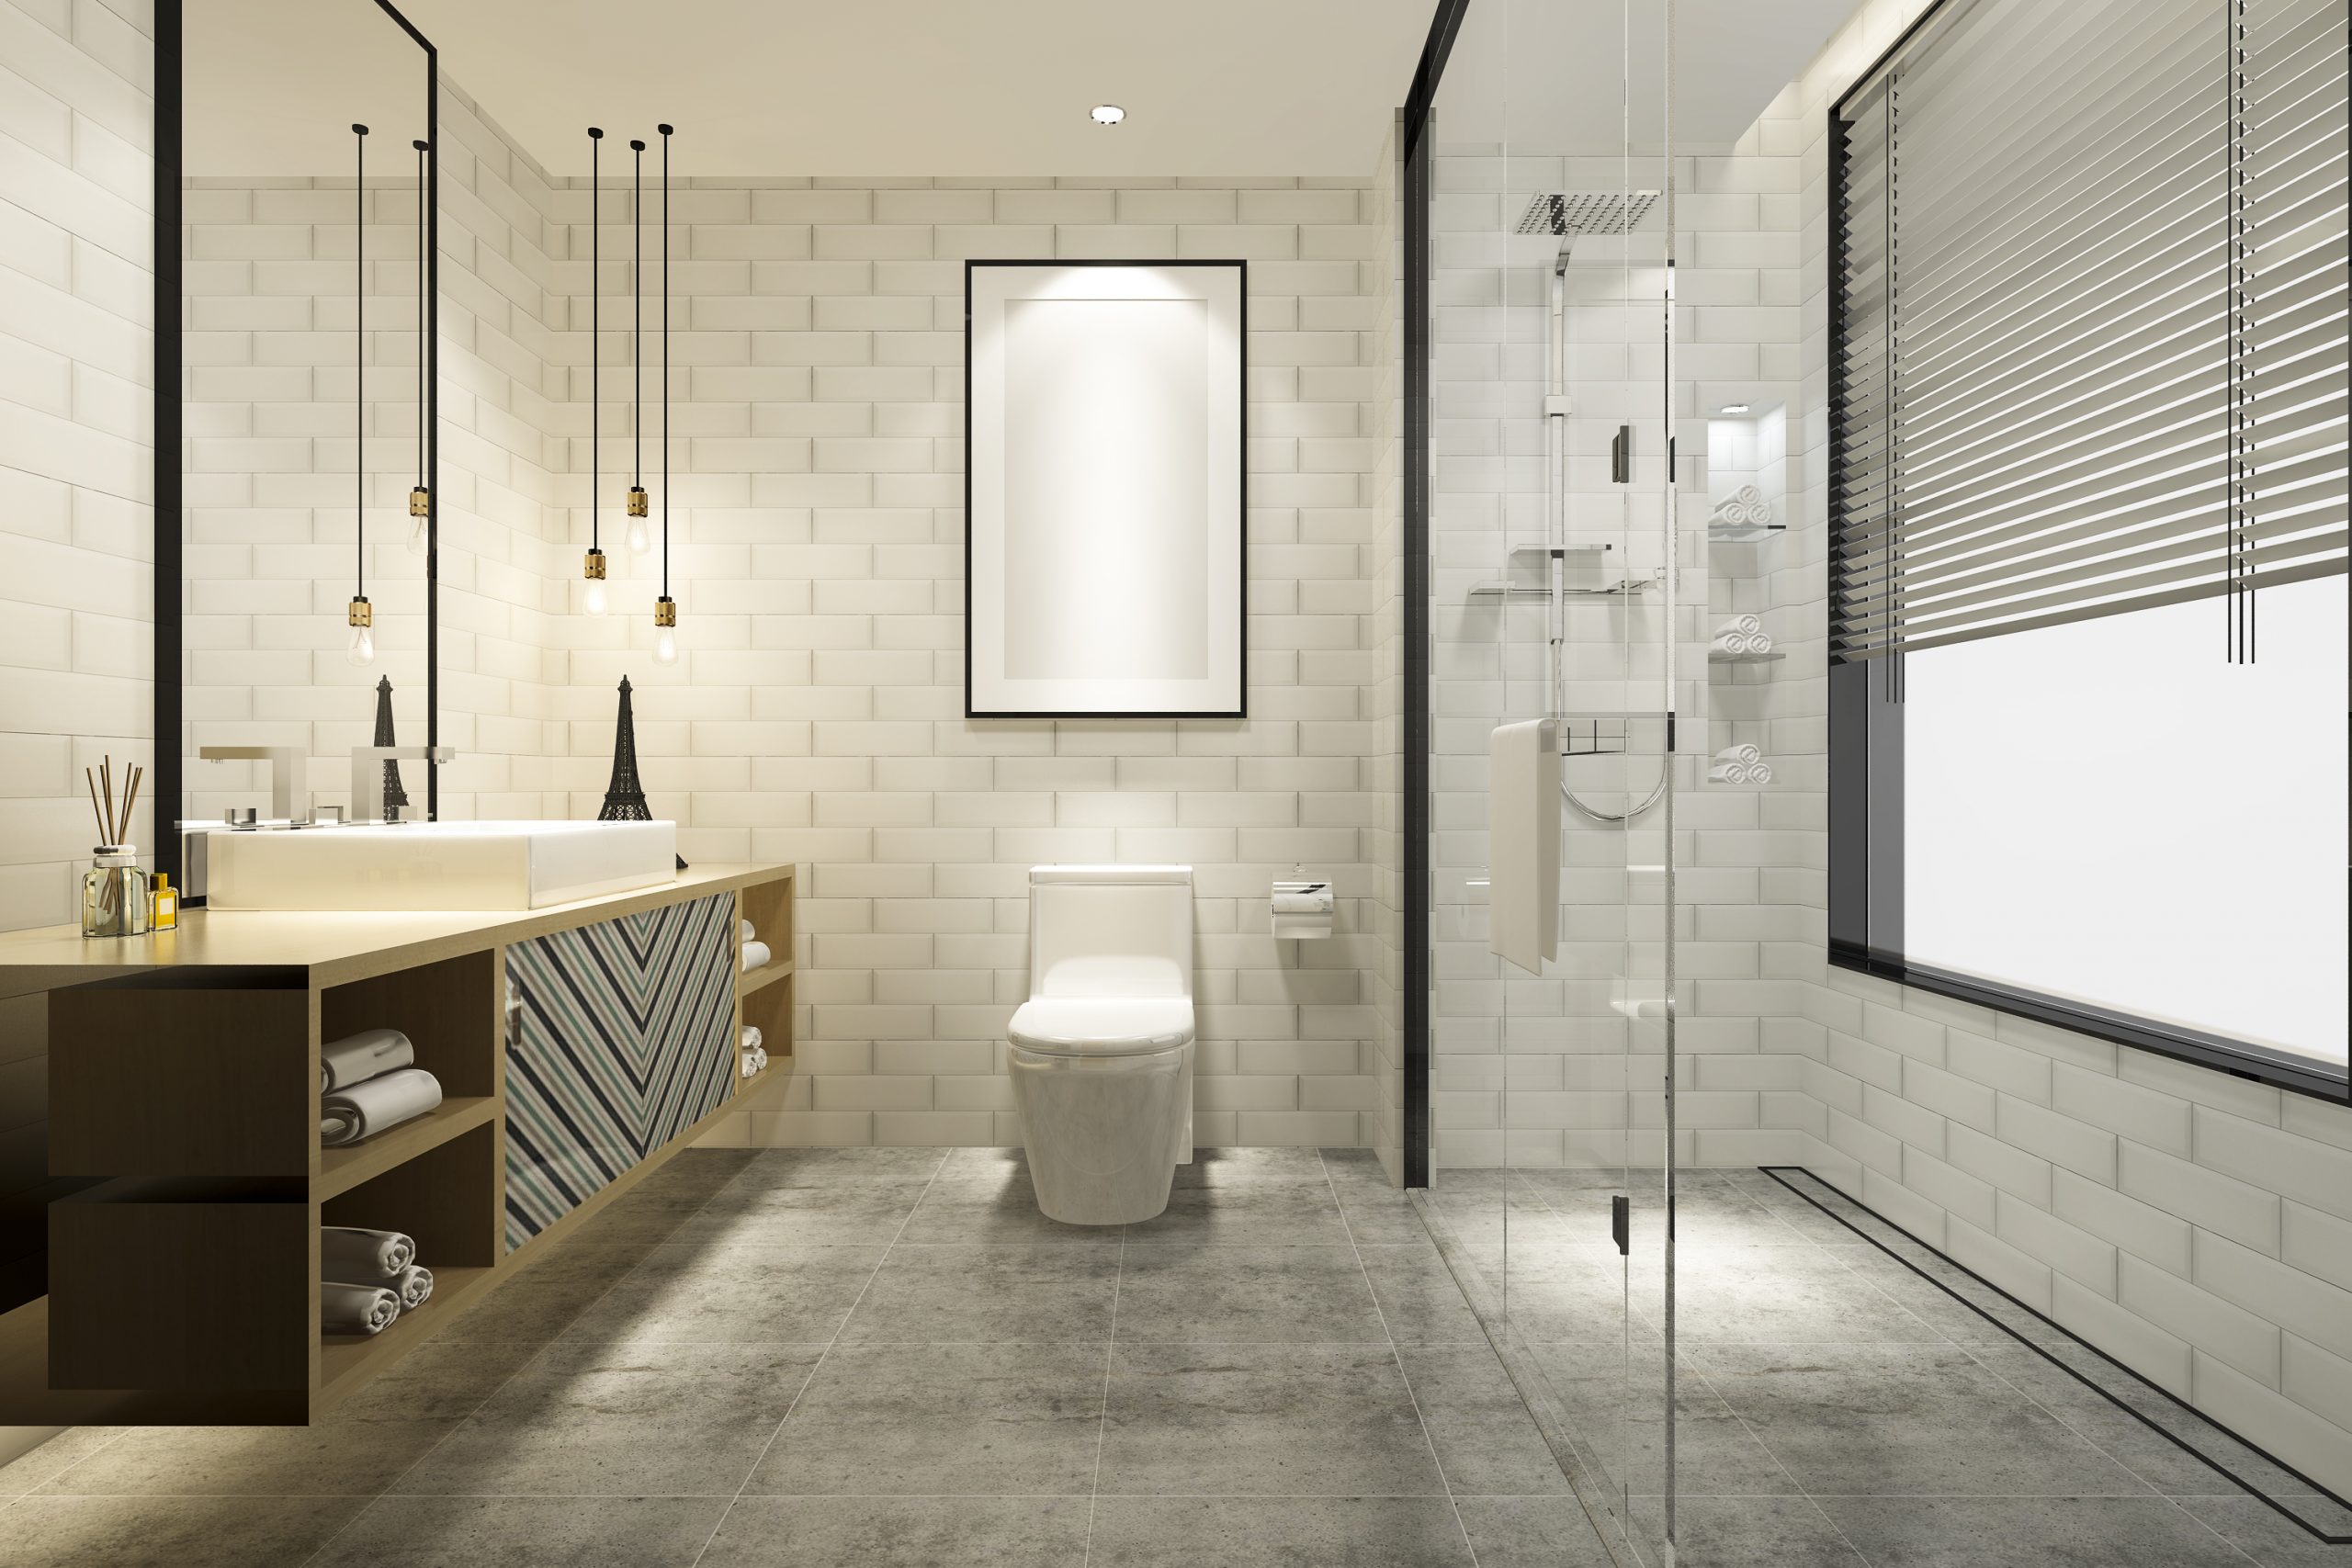 average cost of bathroom tile per square foot